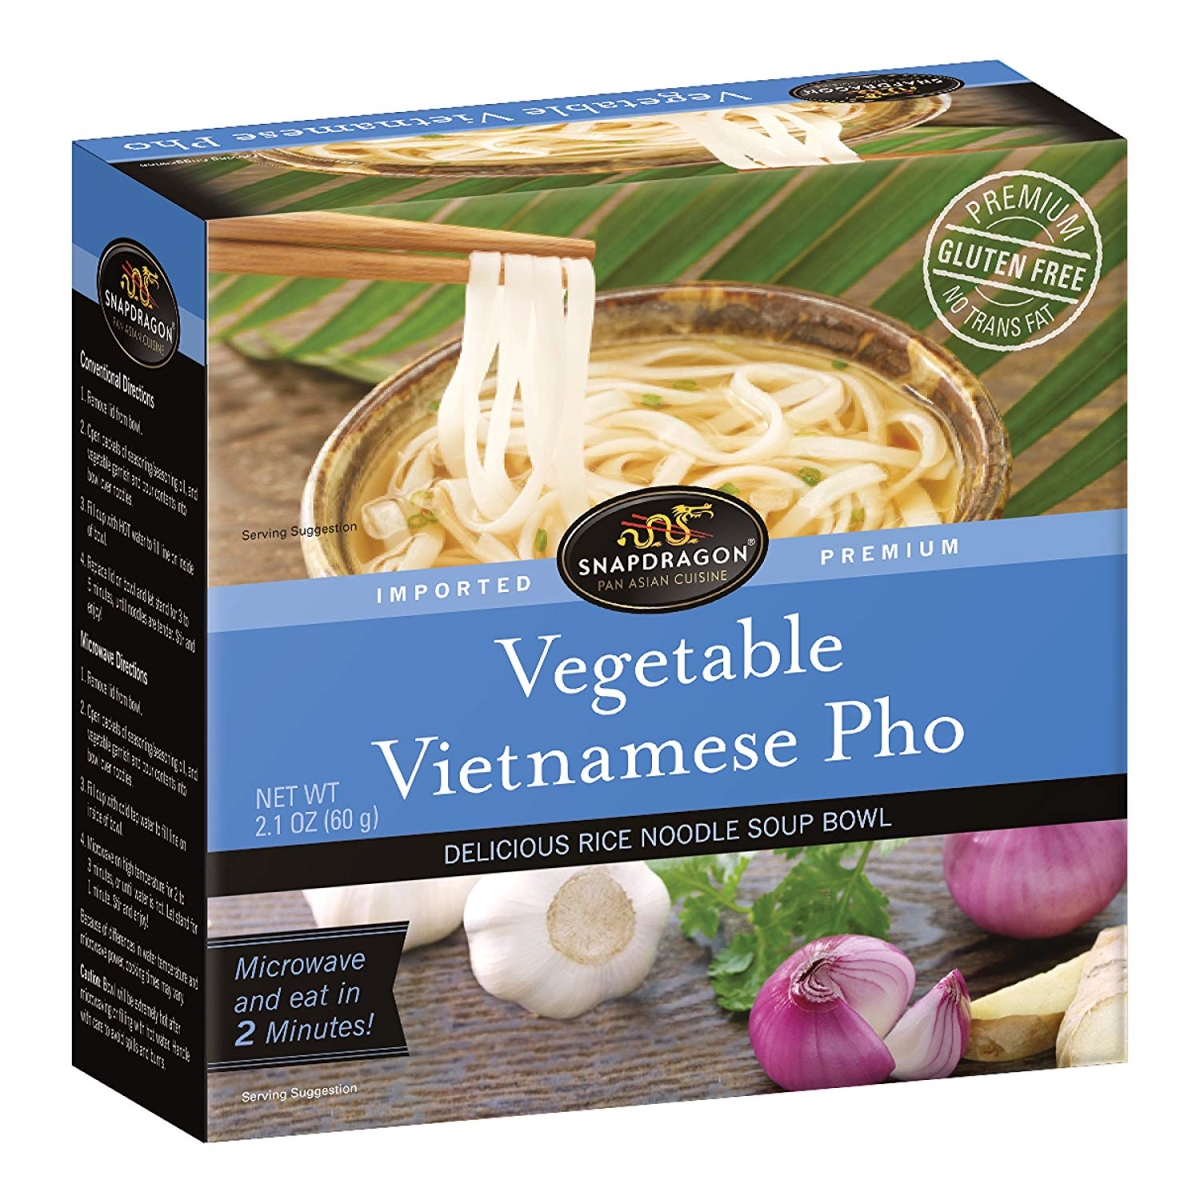 Picture of Snapdragon 234097 2.1 oz Vegetable Vietnamese Pho Soup Bowl